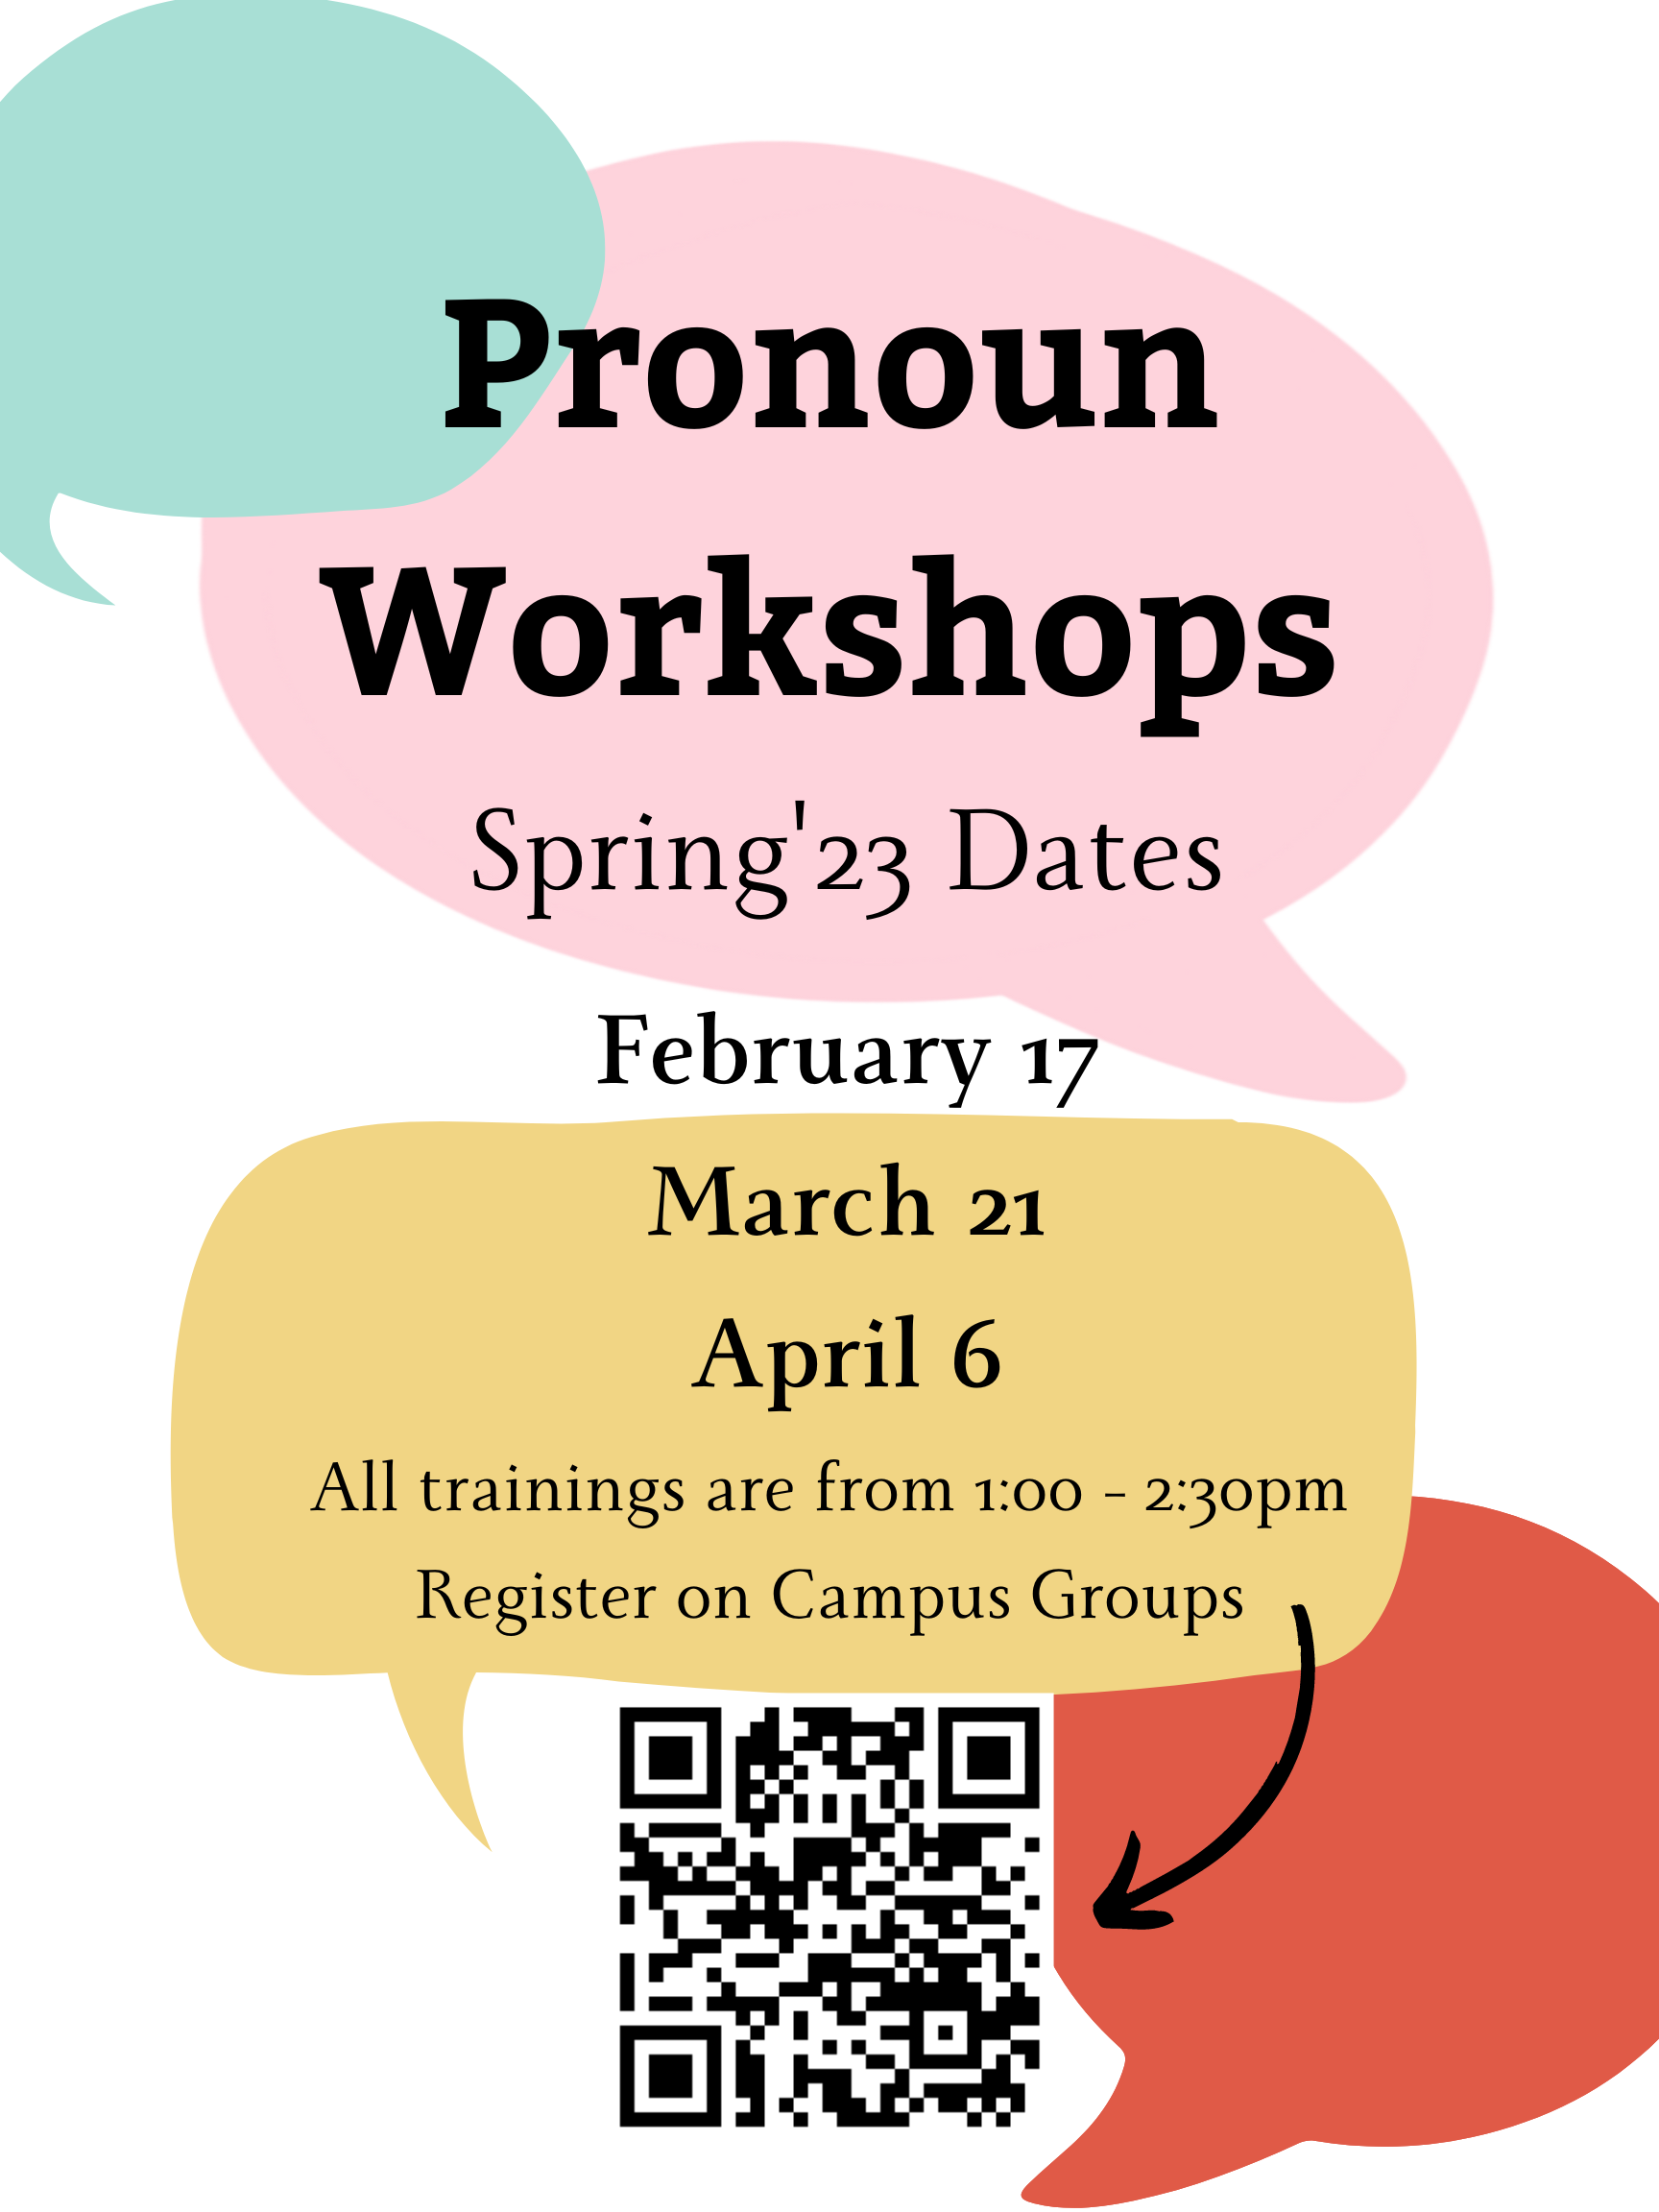 Pronoun Workshop Spring 23 dates